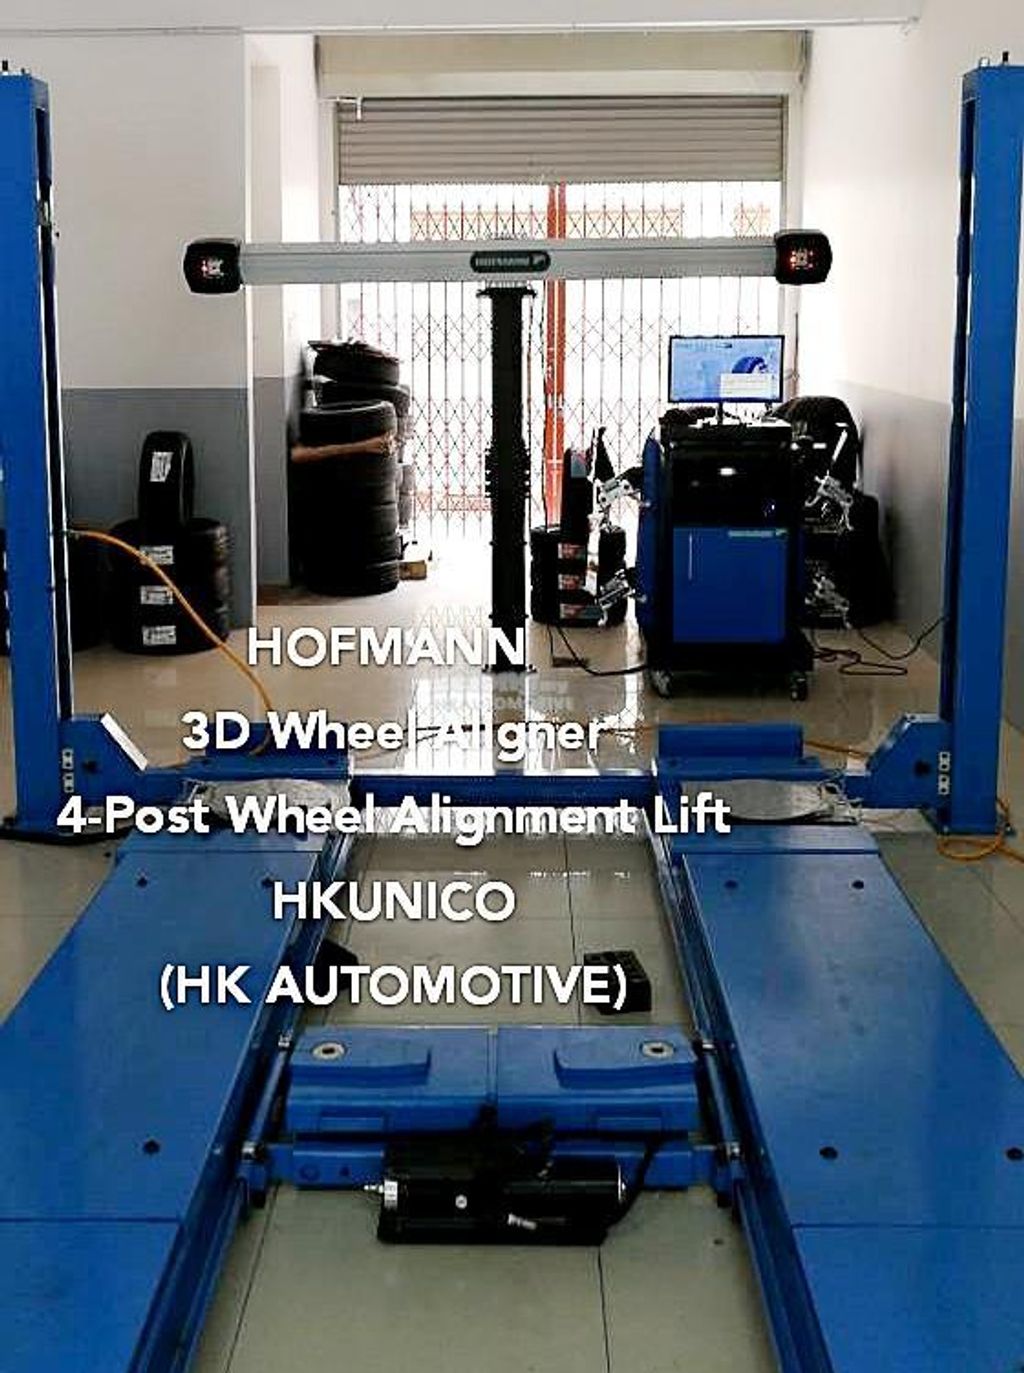 hkunico-gc-3-5f4-4-post-alignment-car-lift-hoist-hkautomotive-1802-24-HKAUTOMOTIVE@19.jpg